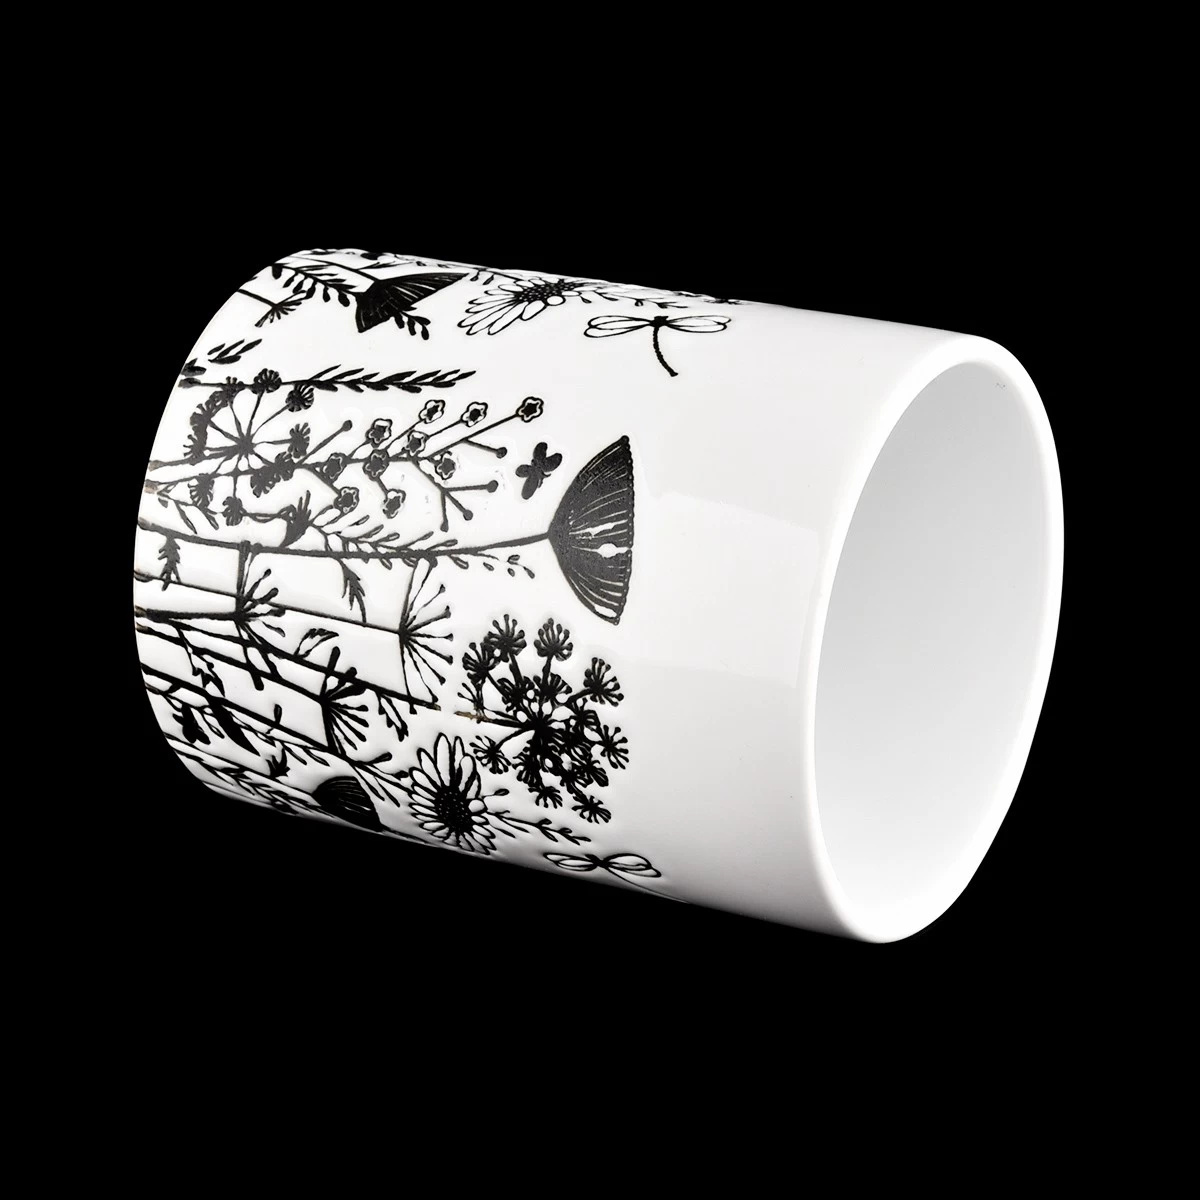 12oz white ceramic vessel with black engraved printing